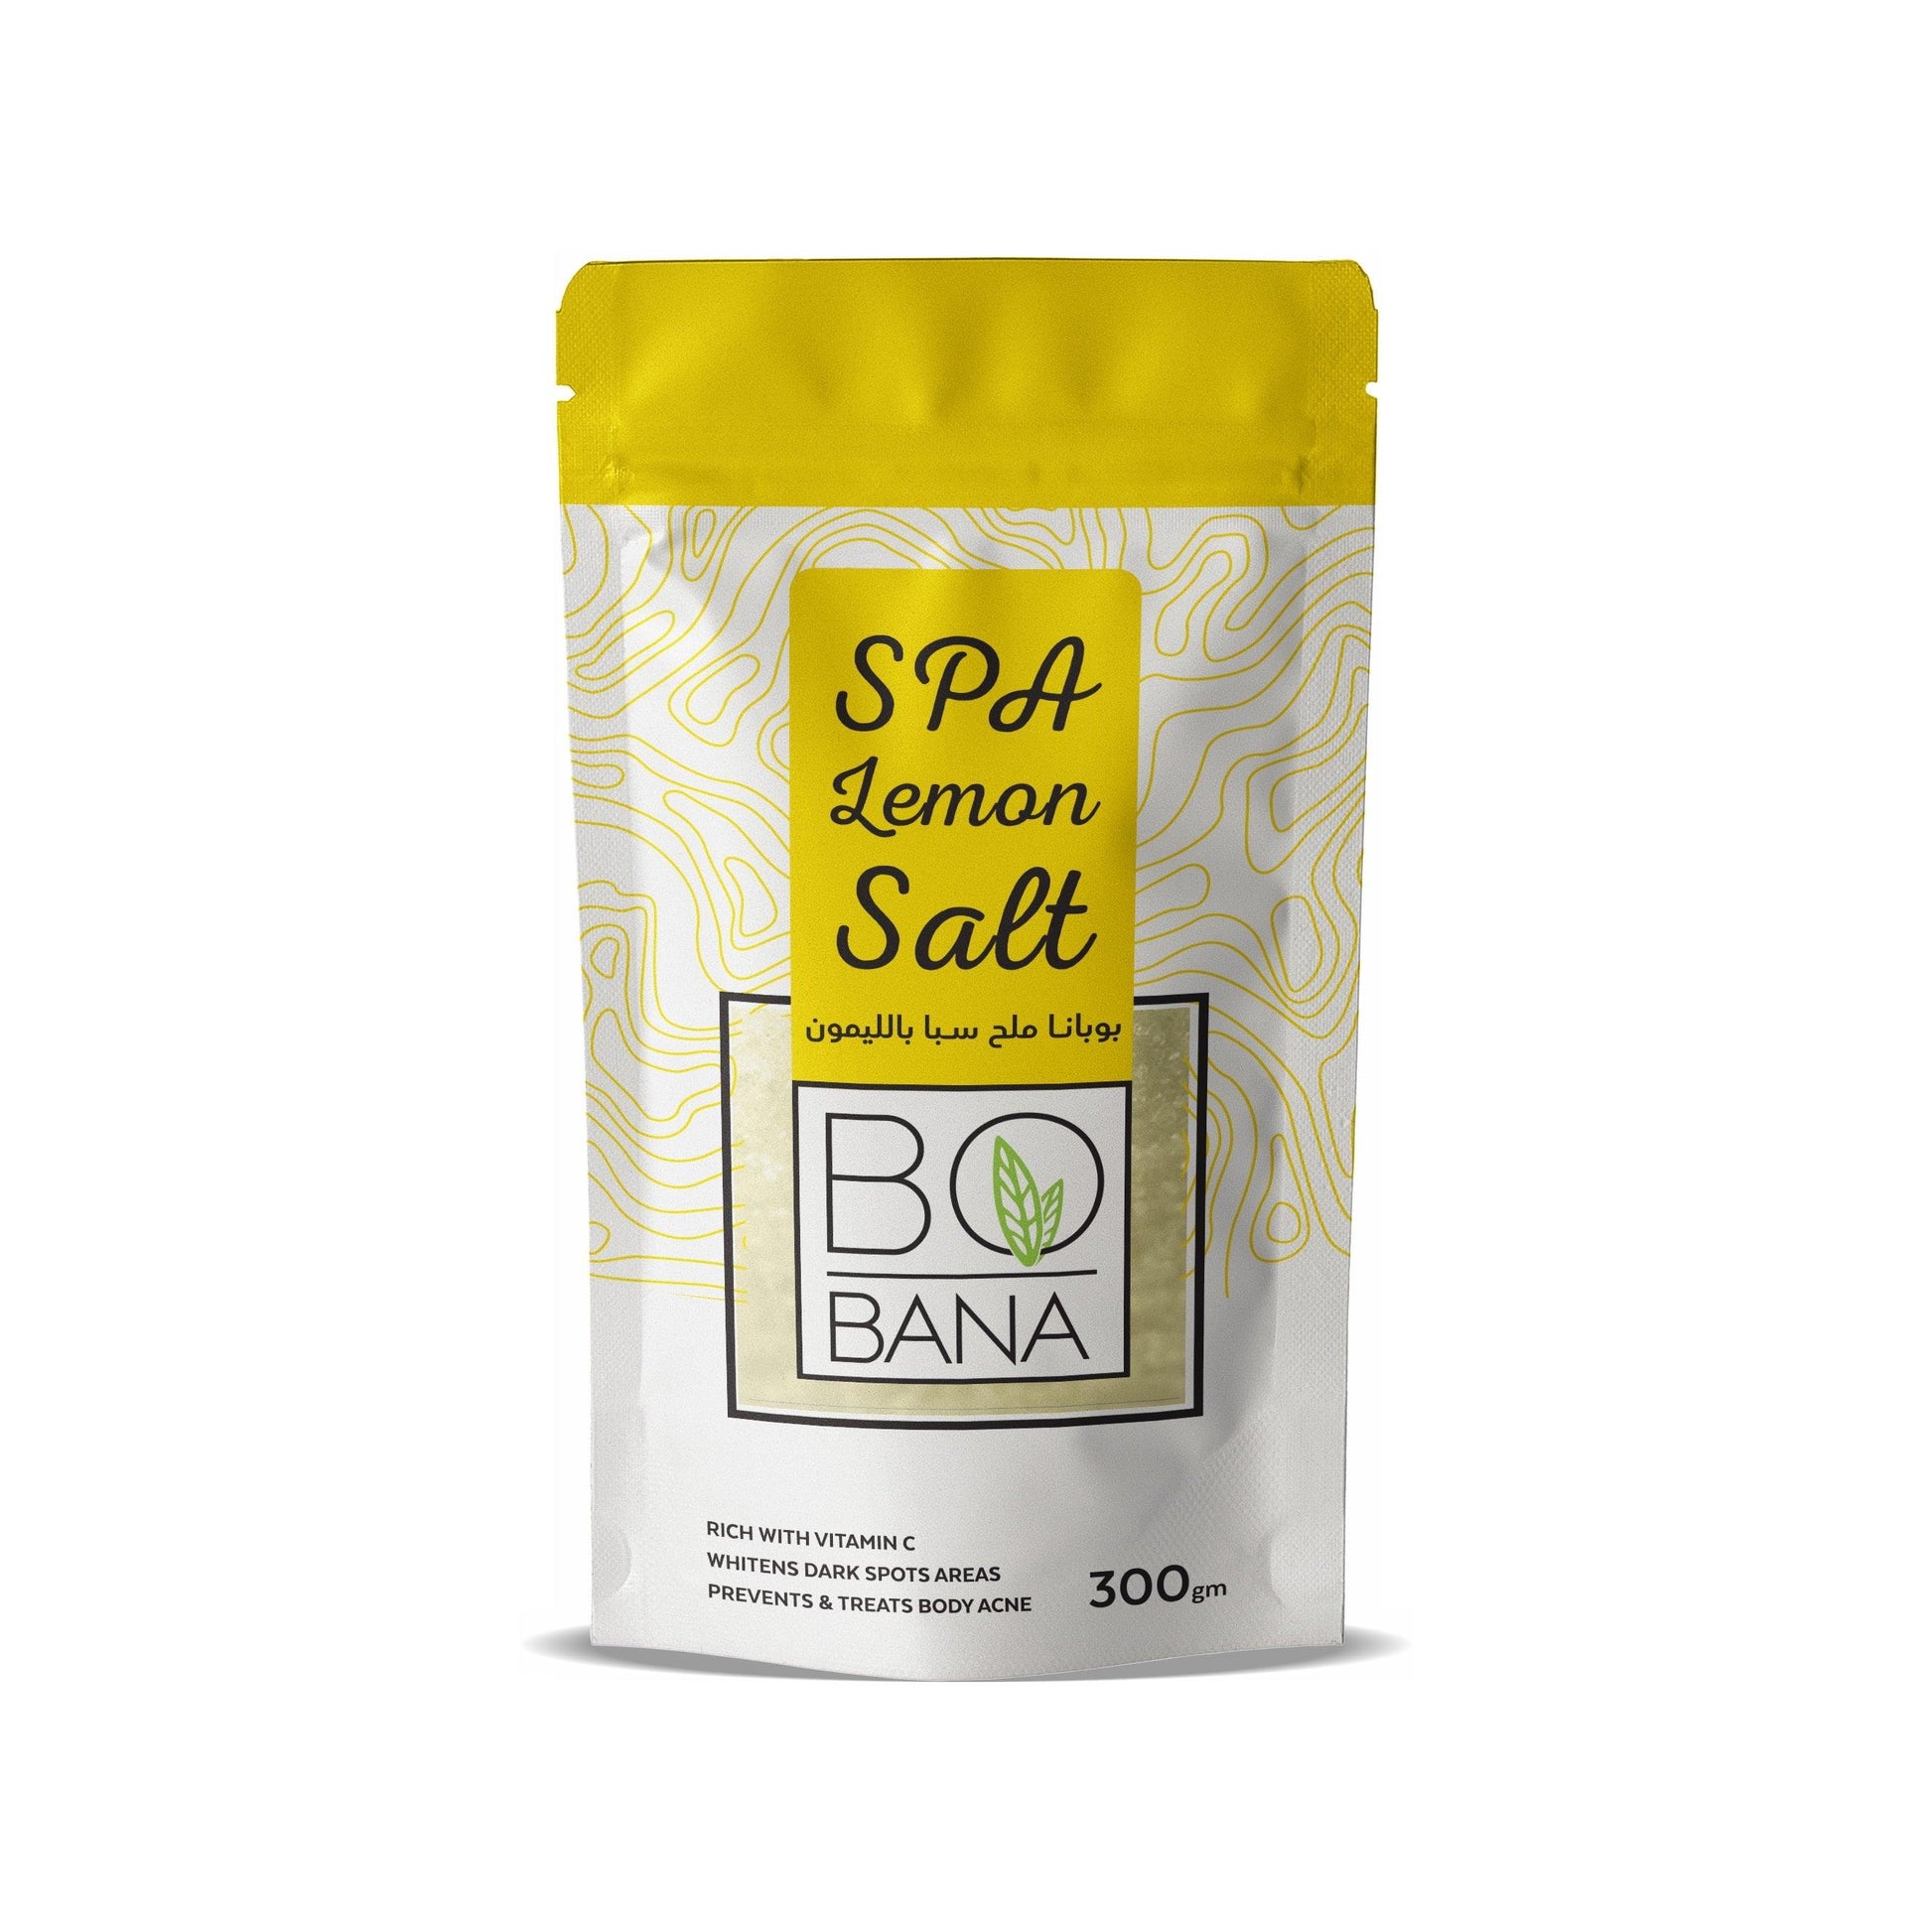 Bobana Lemon Spa Salt, 300gm - Beauty Bounty